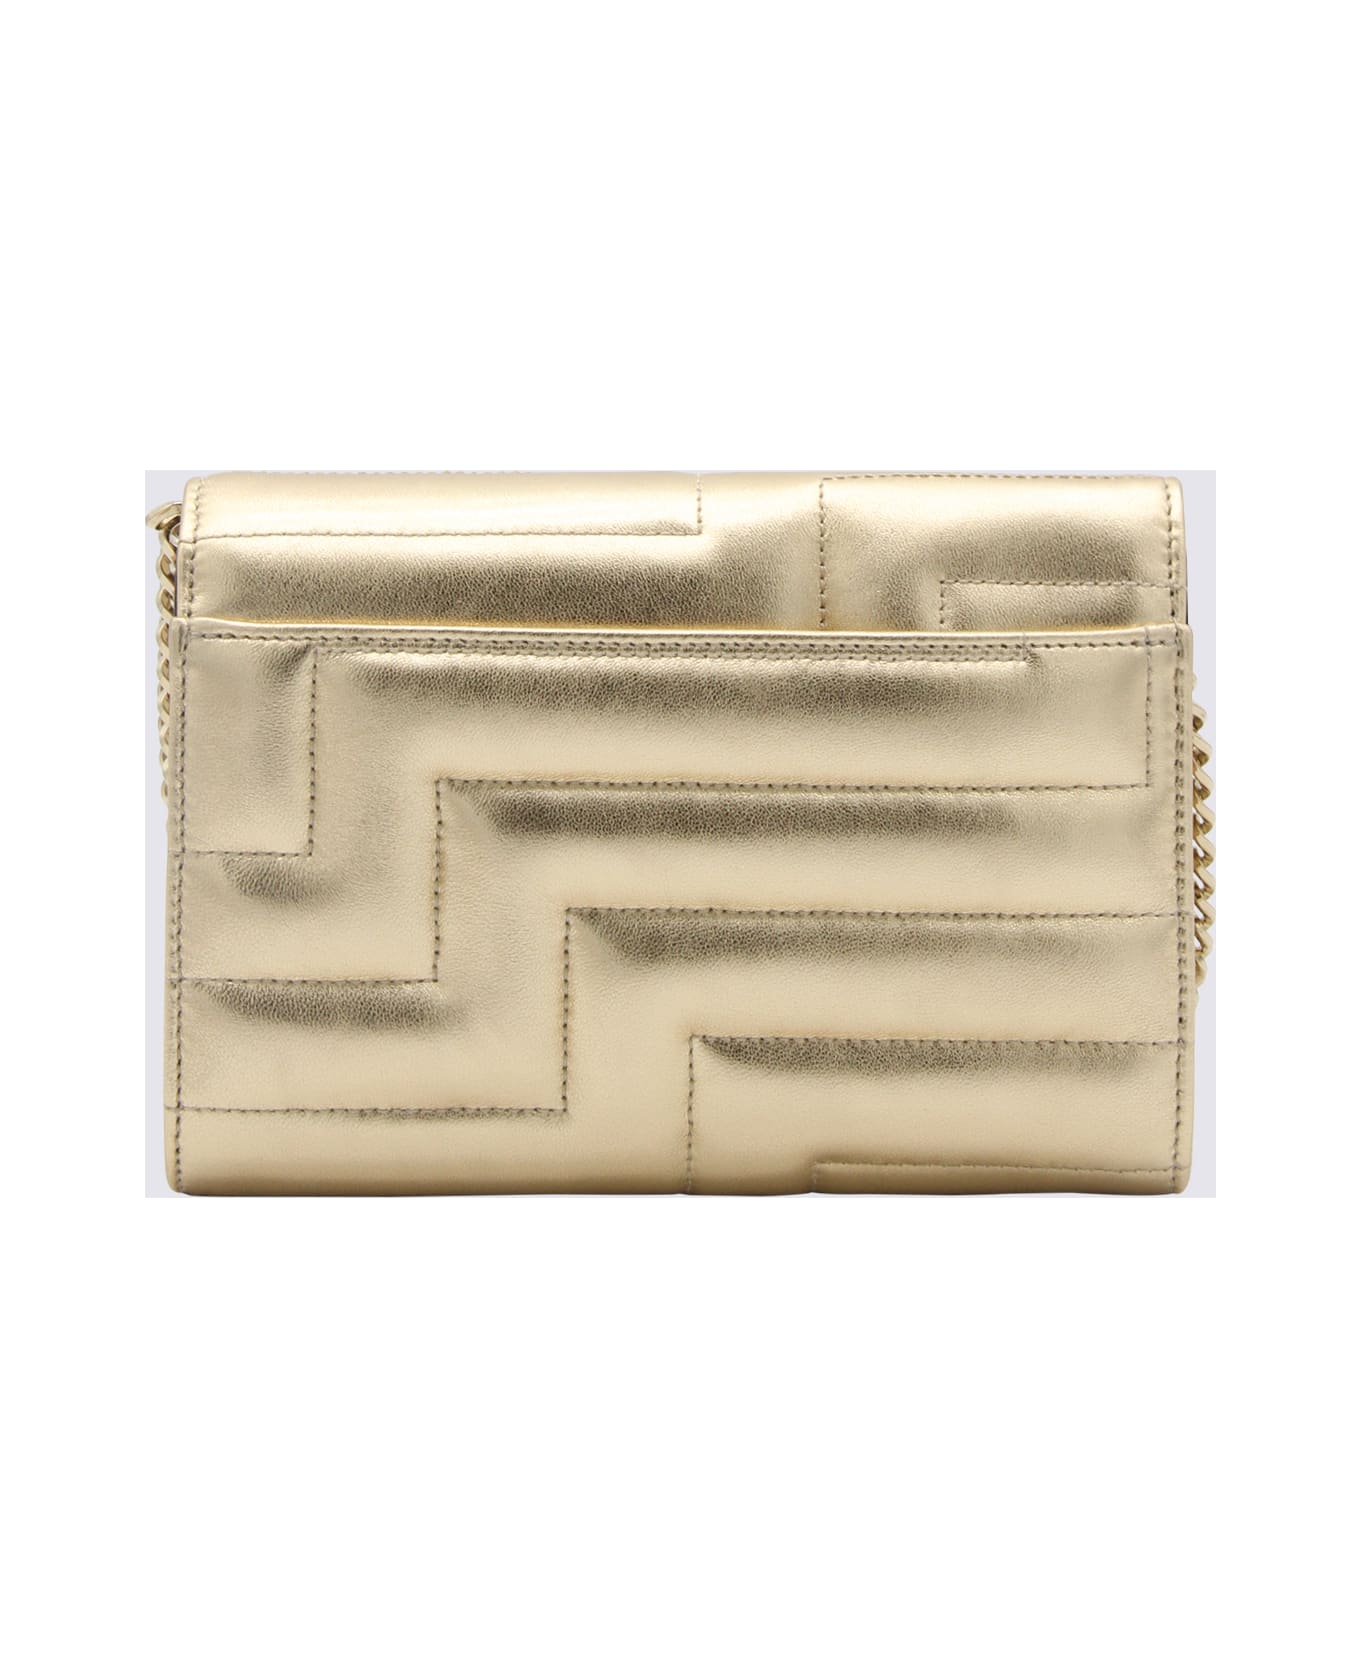 Jimmy Choo Gold Metal Leather Avenue Clutch Crossbody Bag - 008937